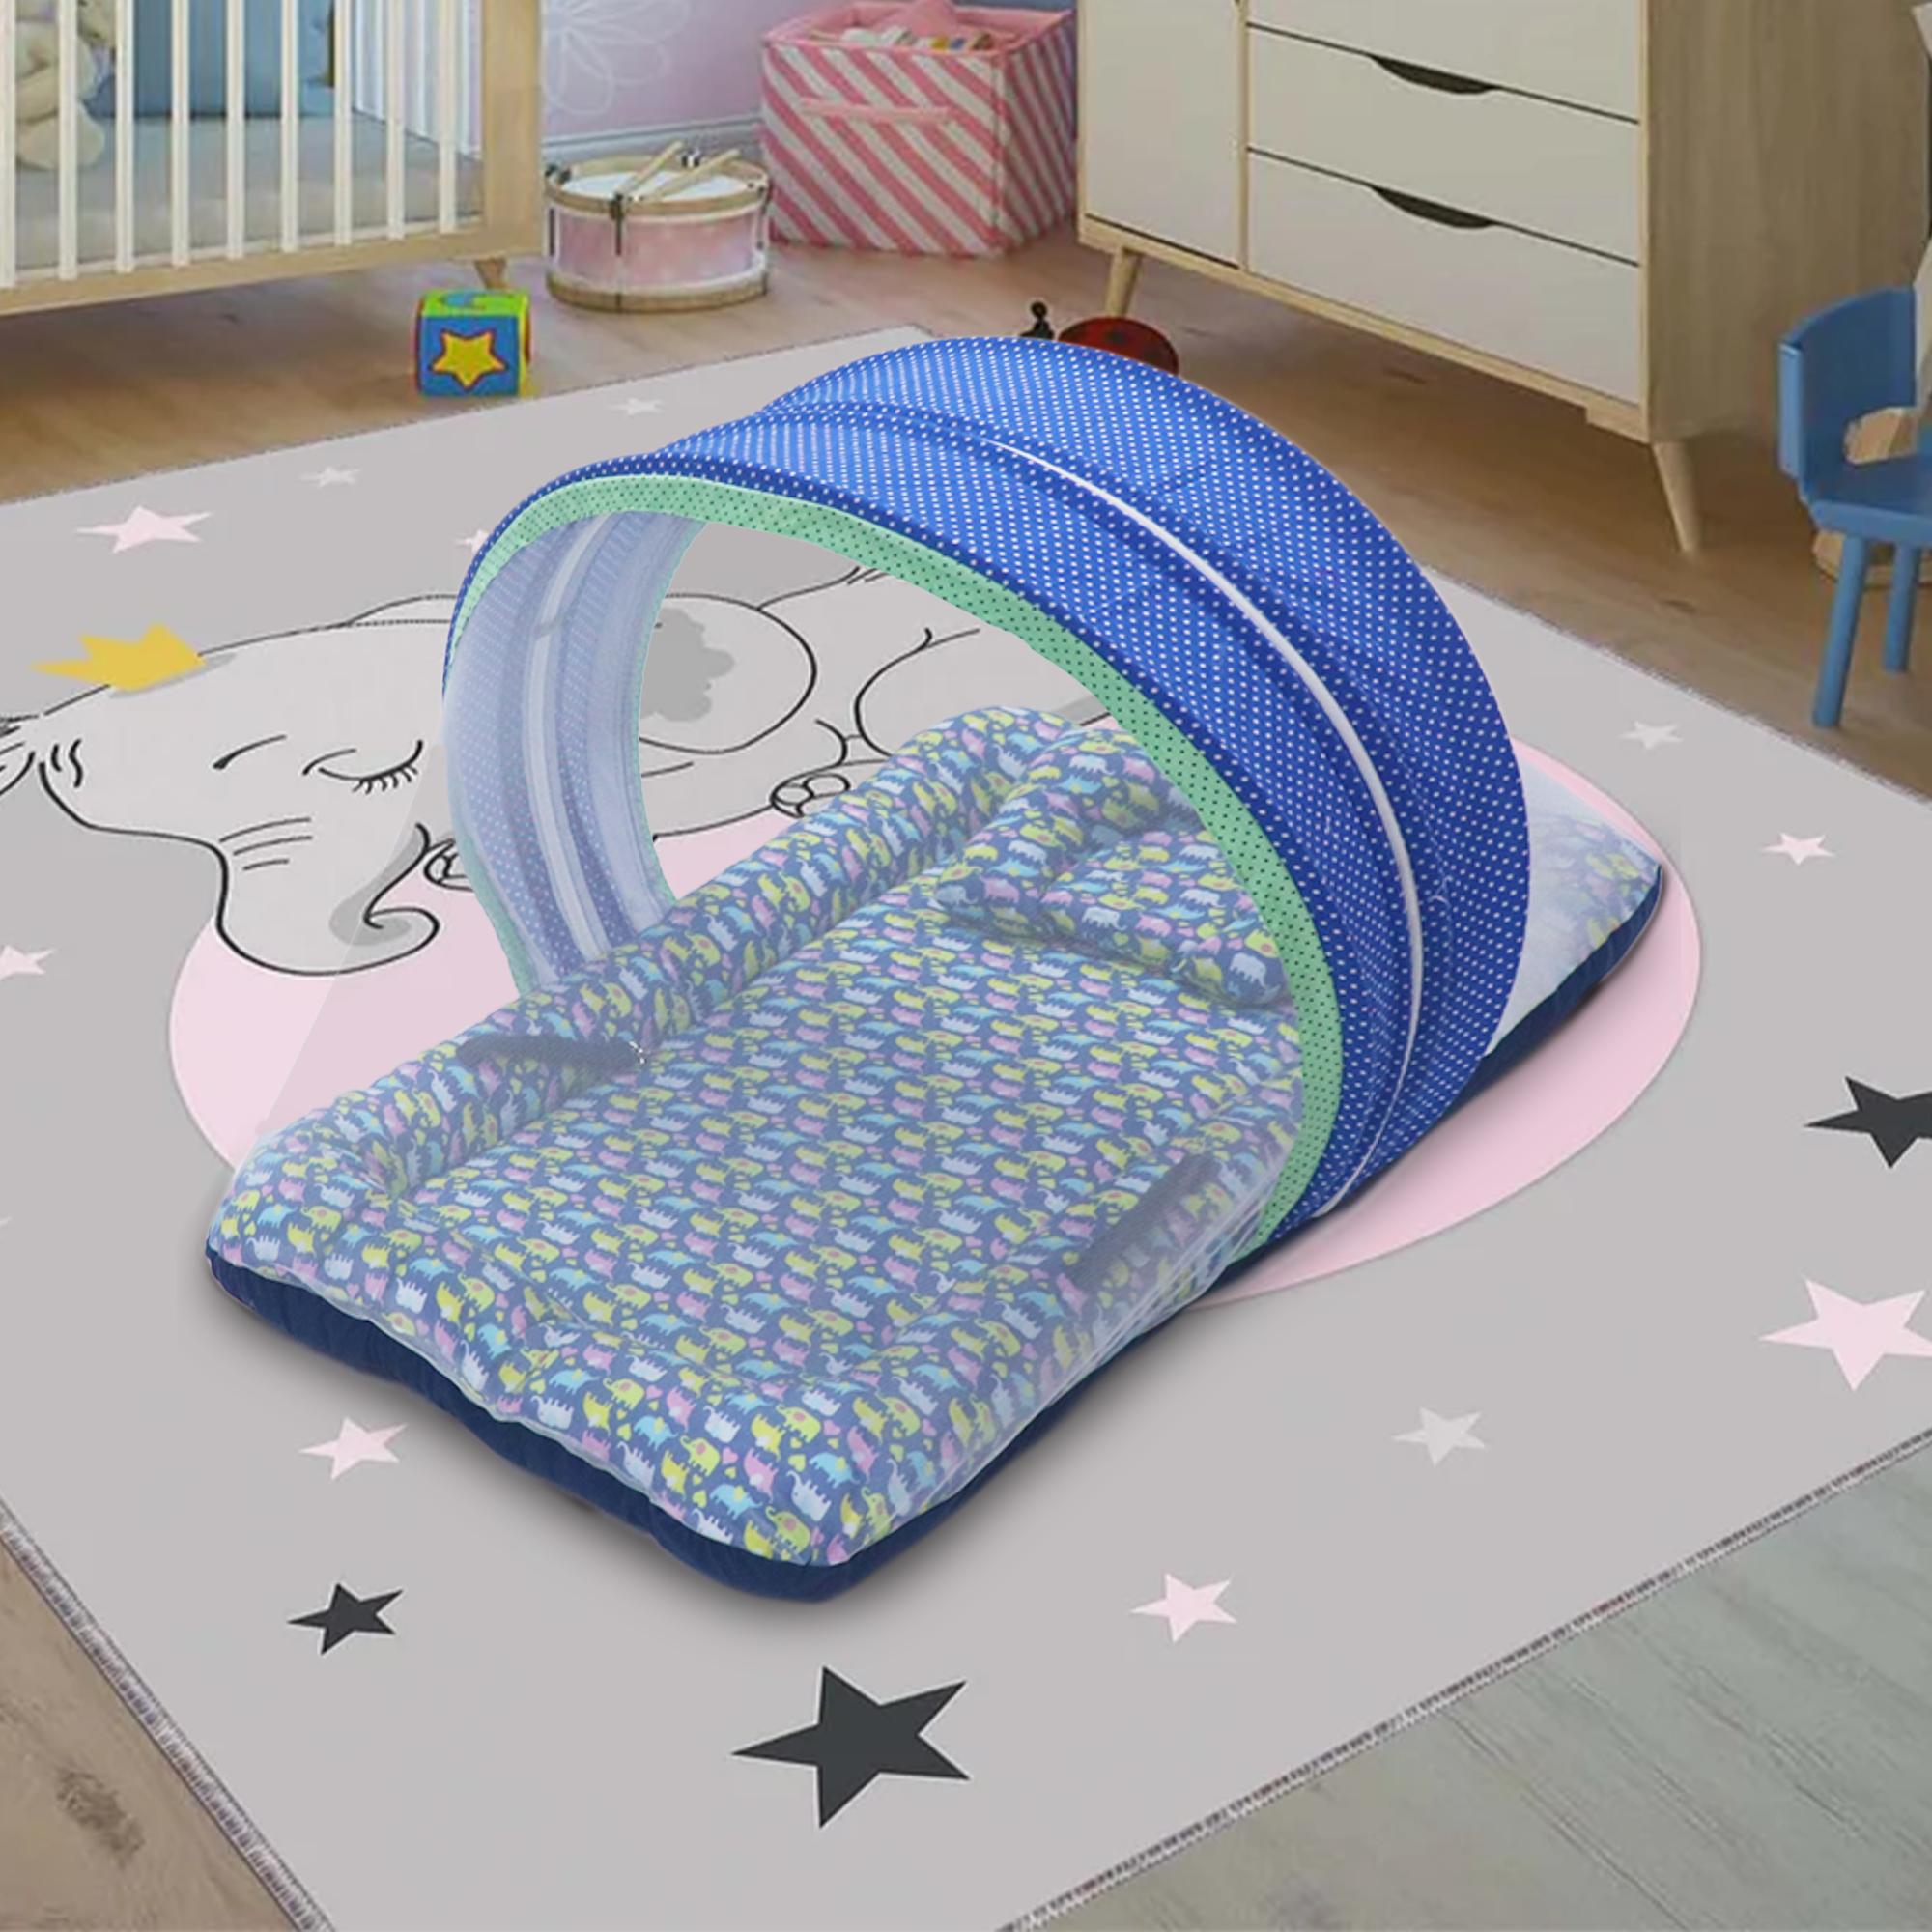 Dancing Elephants -  Kradyl Kroft Bassinet Style Mosquito Net Bedding for Infants